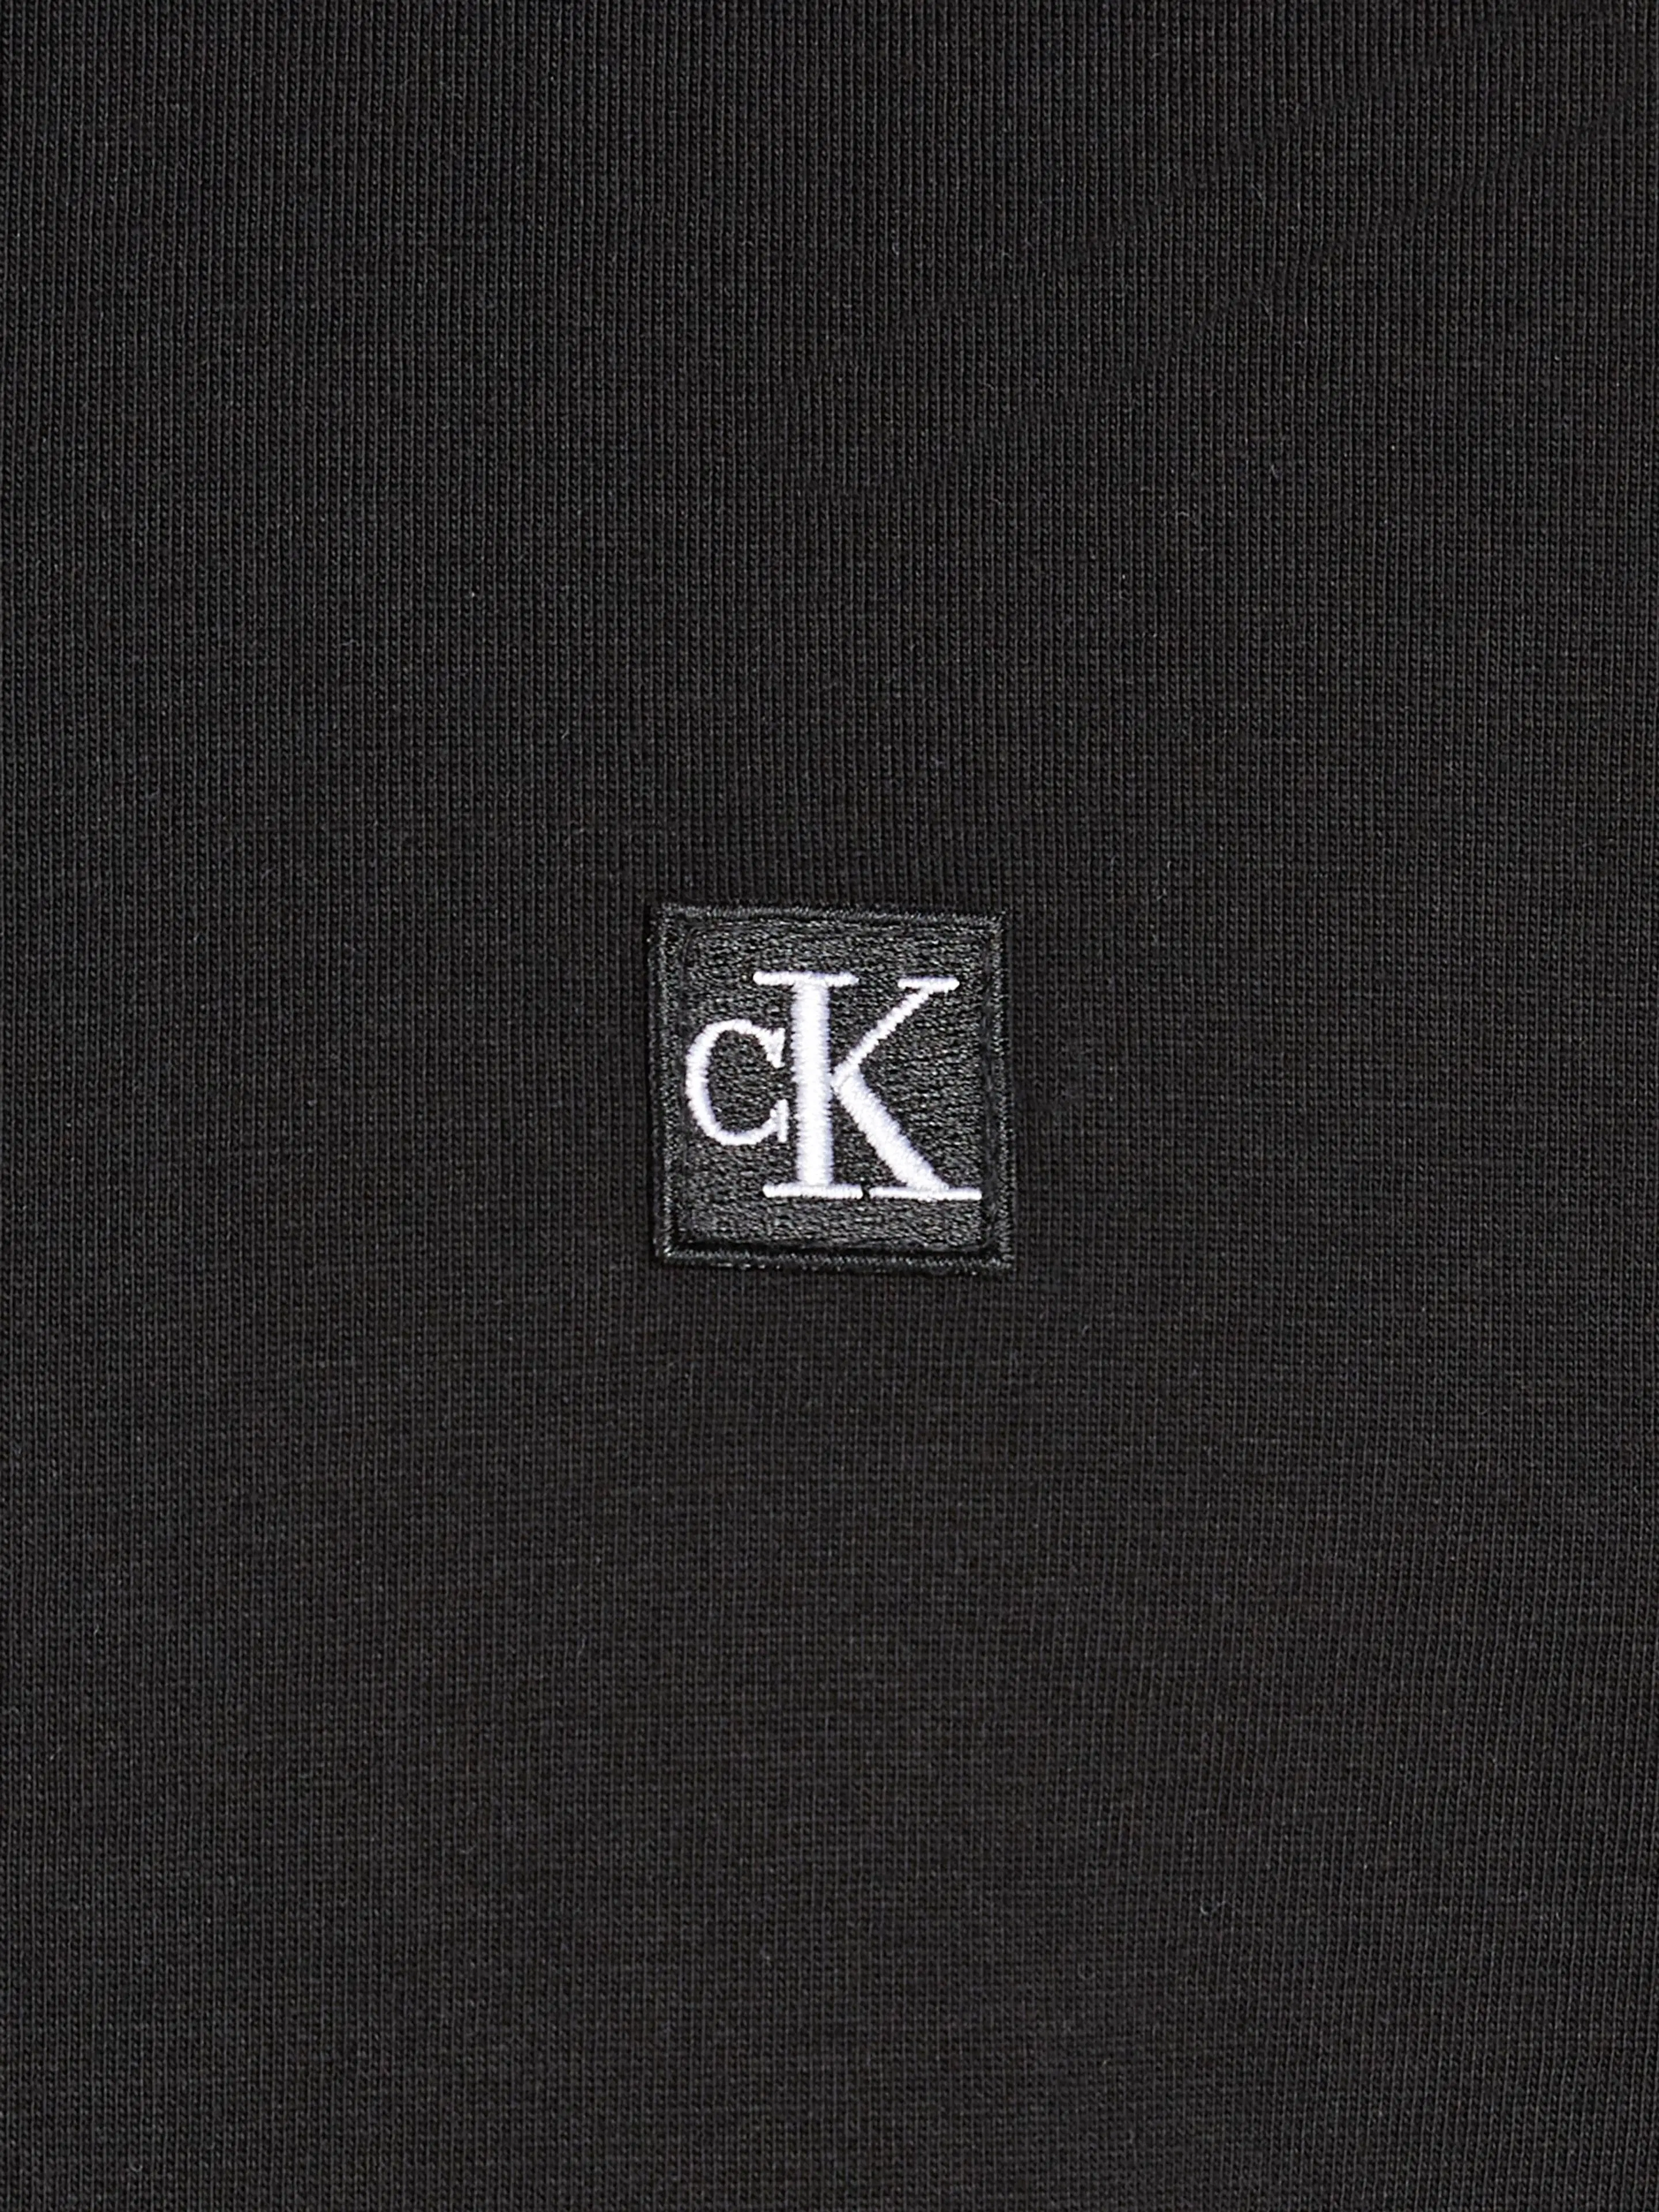 Calvin Klein jeans Ck embro badge t-paita